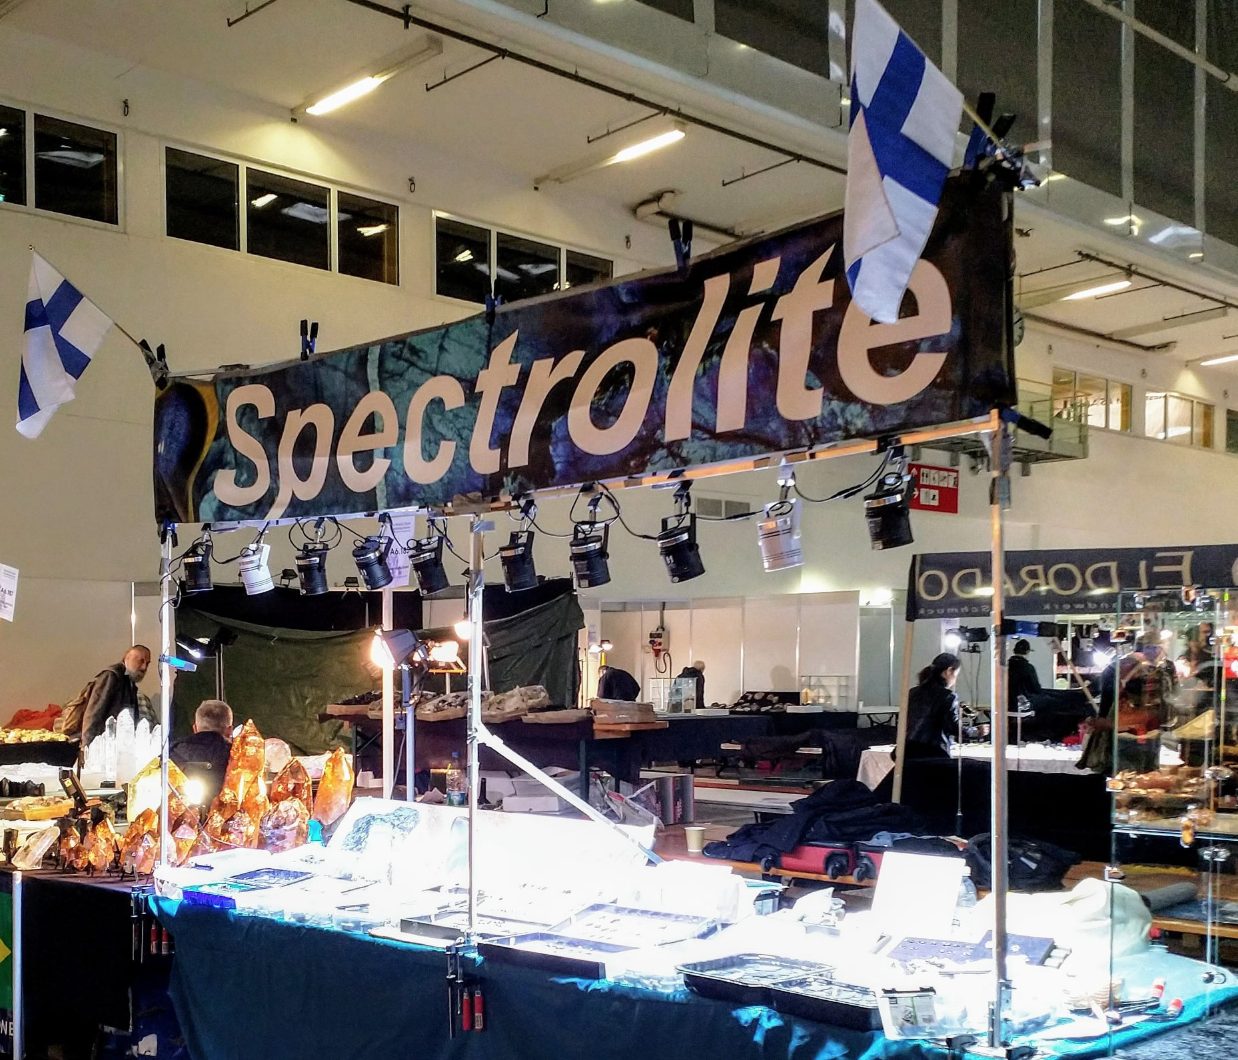 Spectrolite Finland